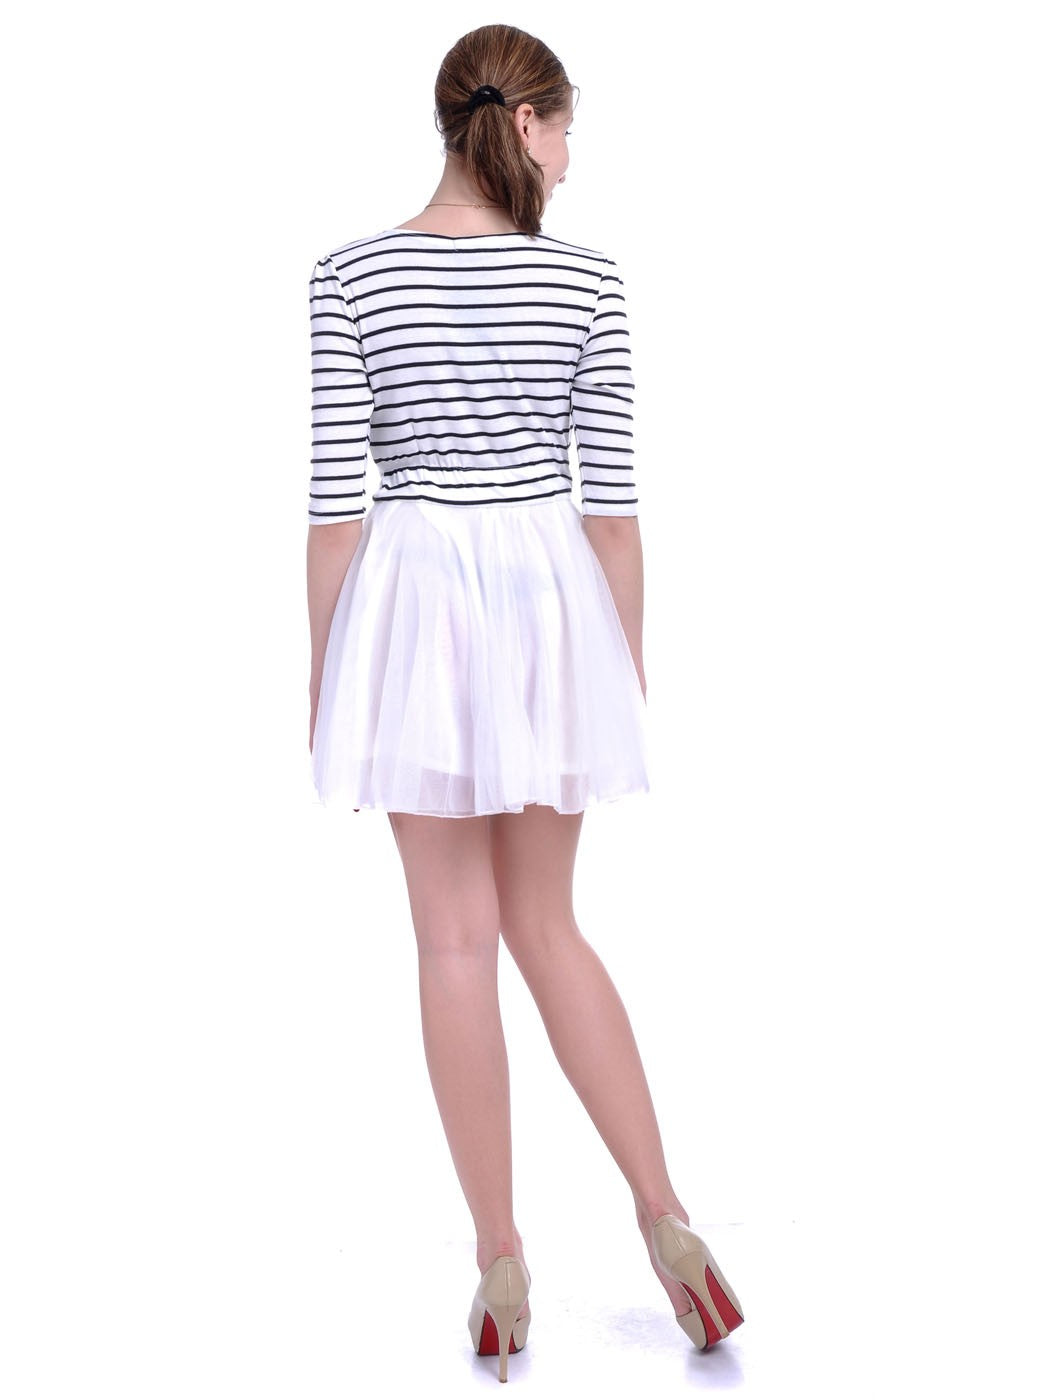 Nautical Horizontal Stripes Tulle Overlay Dress